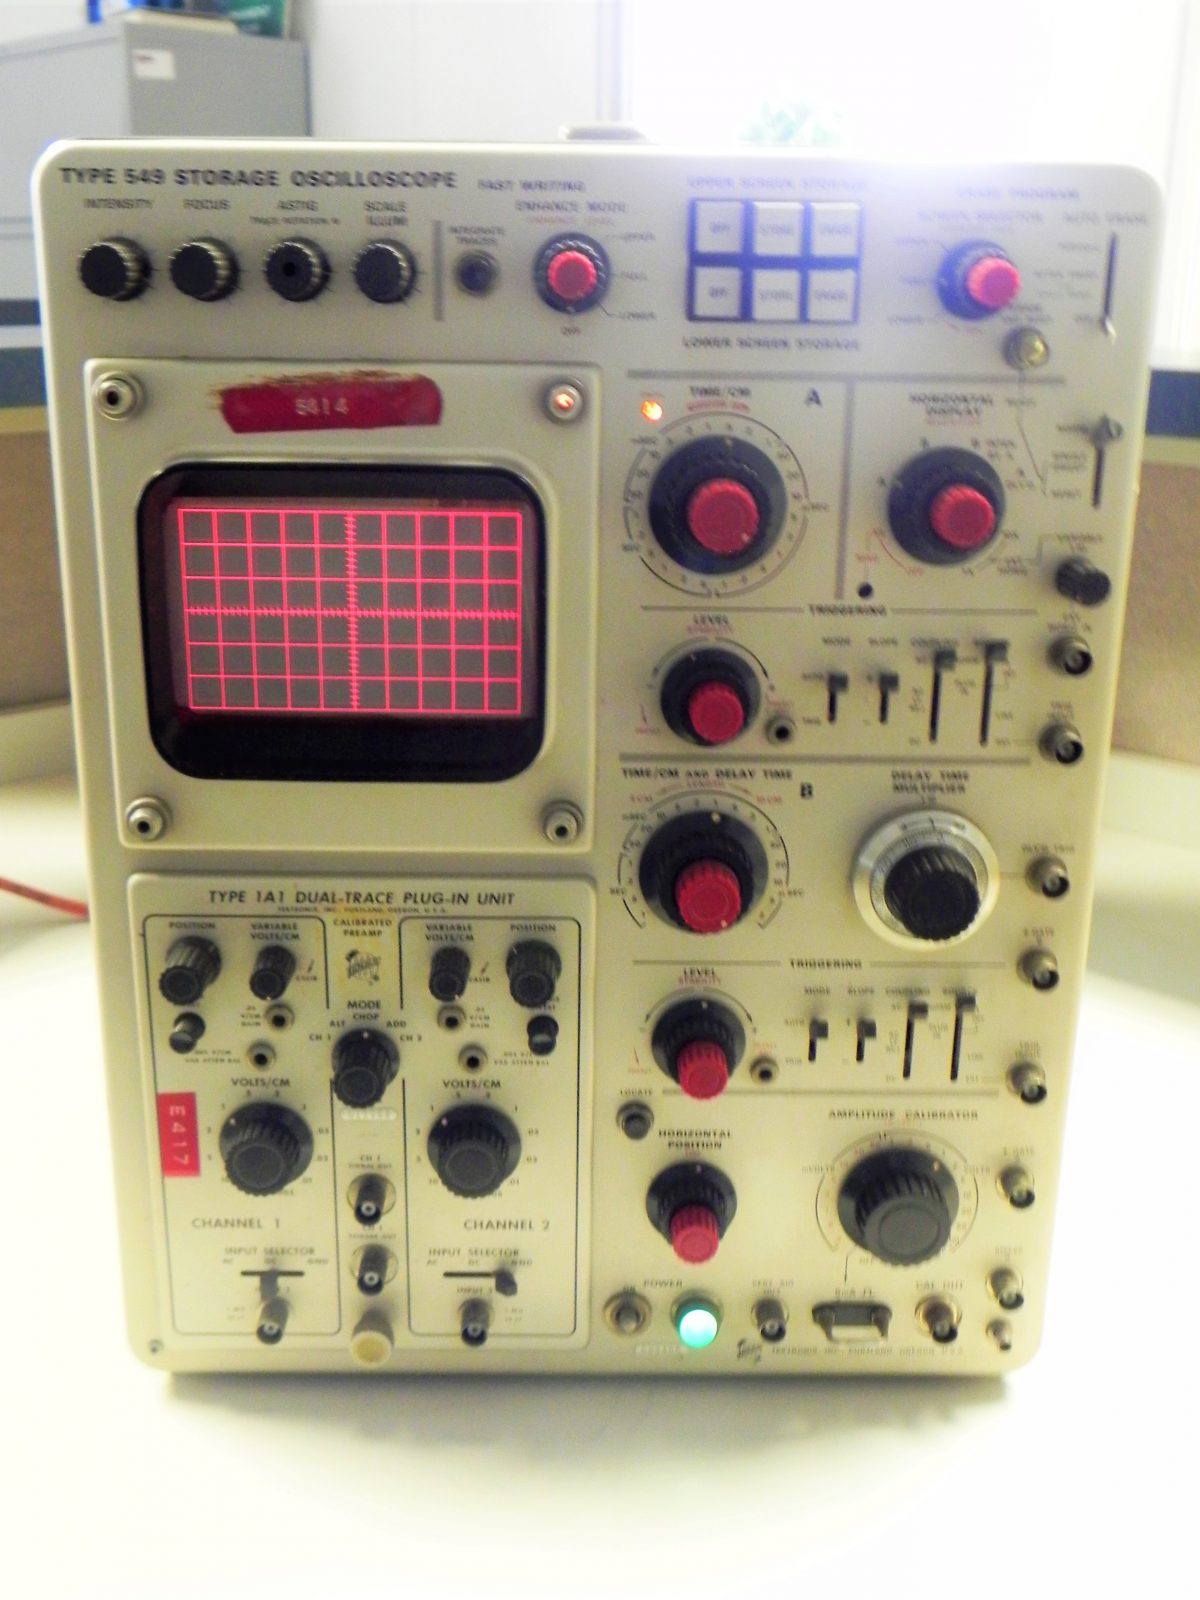 Tektronix Type 549 Storage Oscilloscope – Collector’s Item